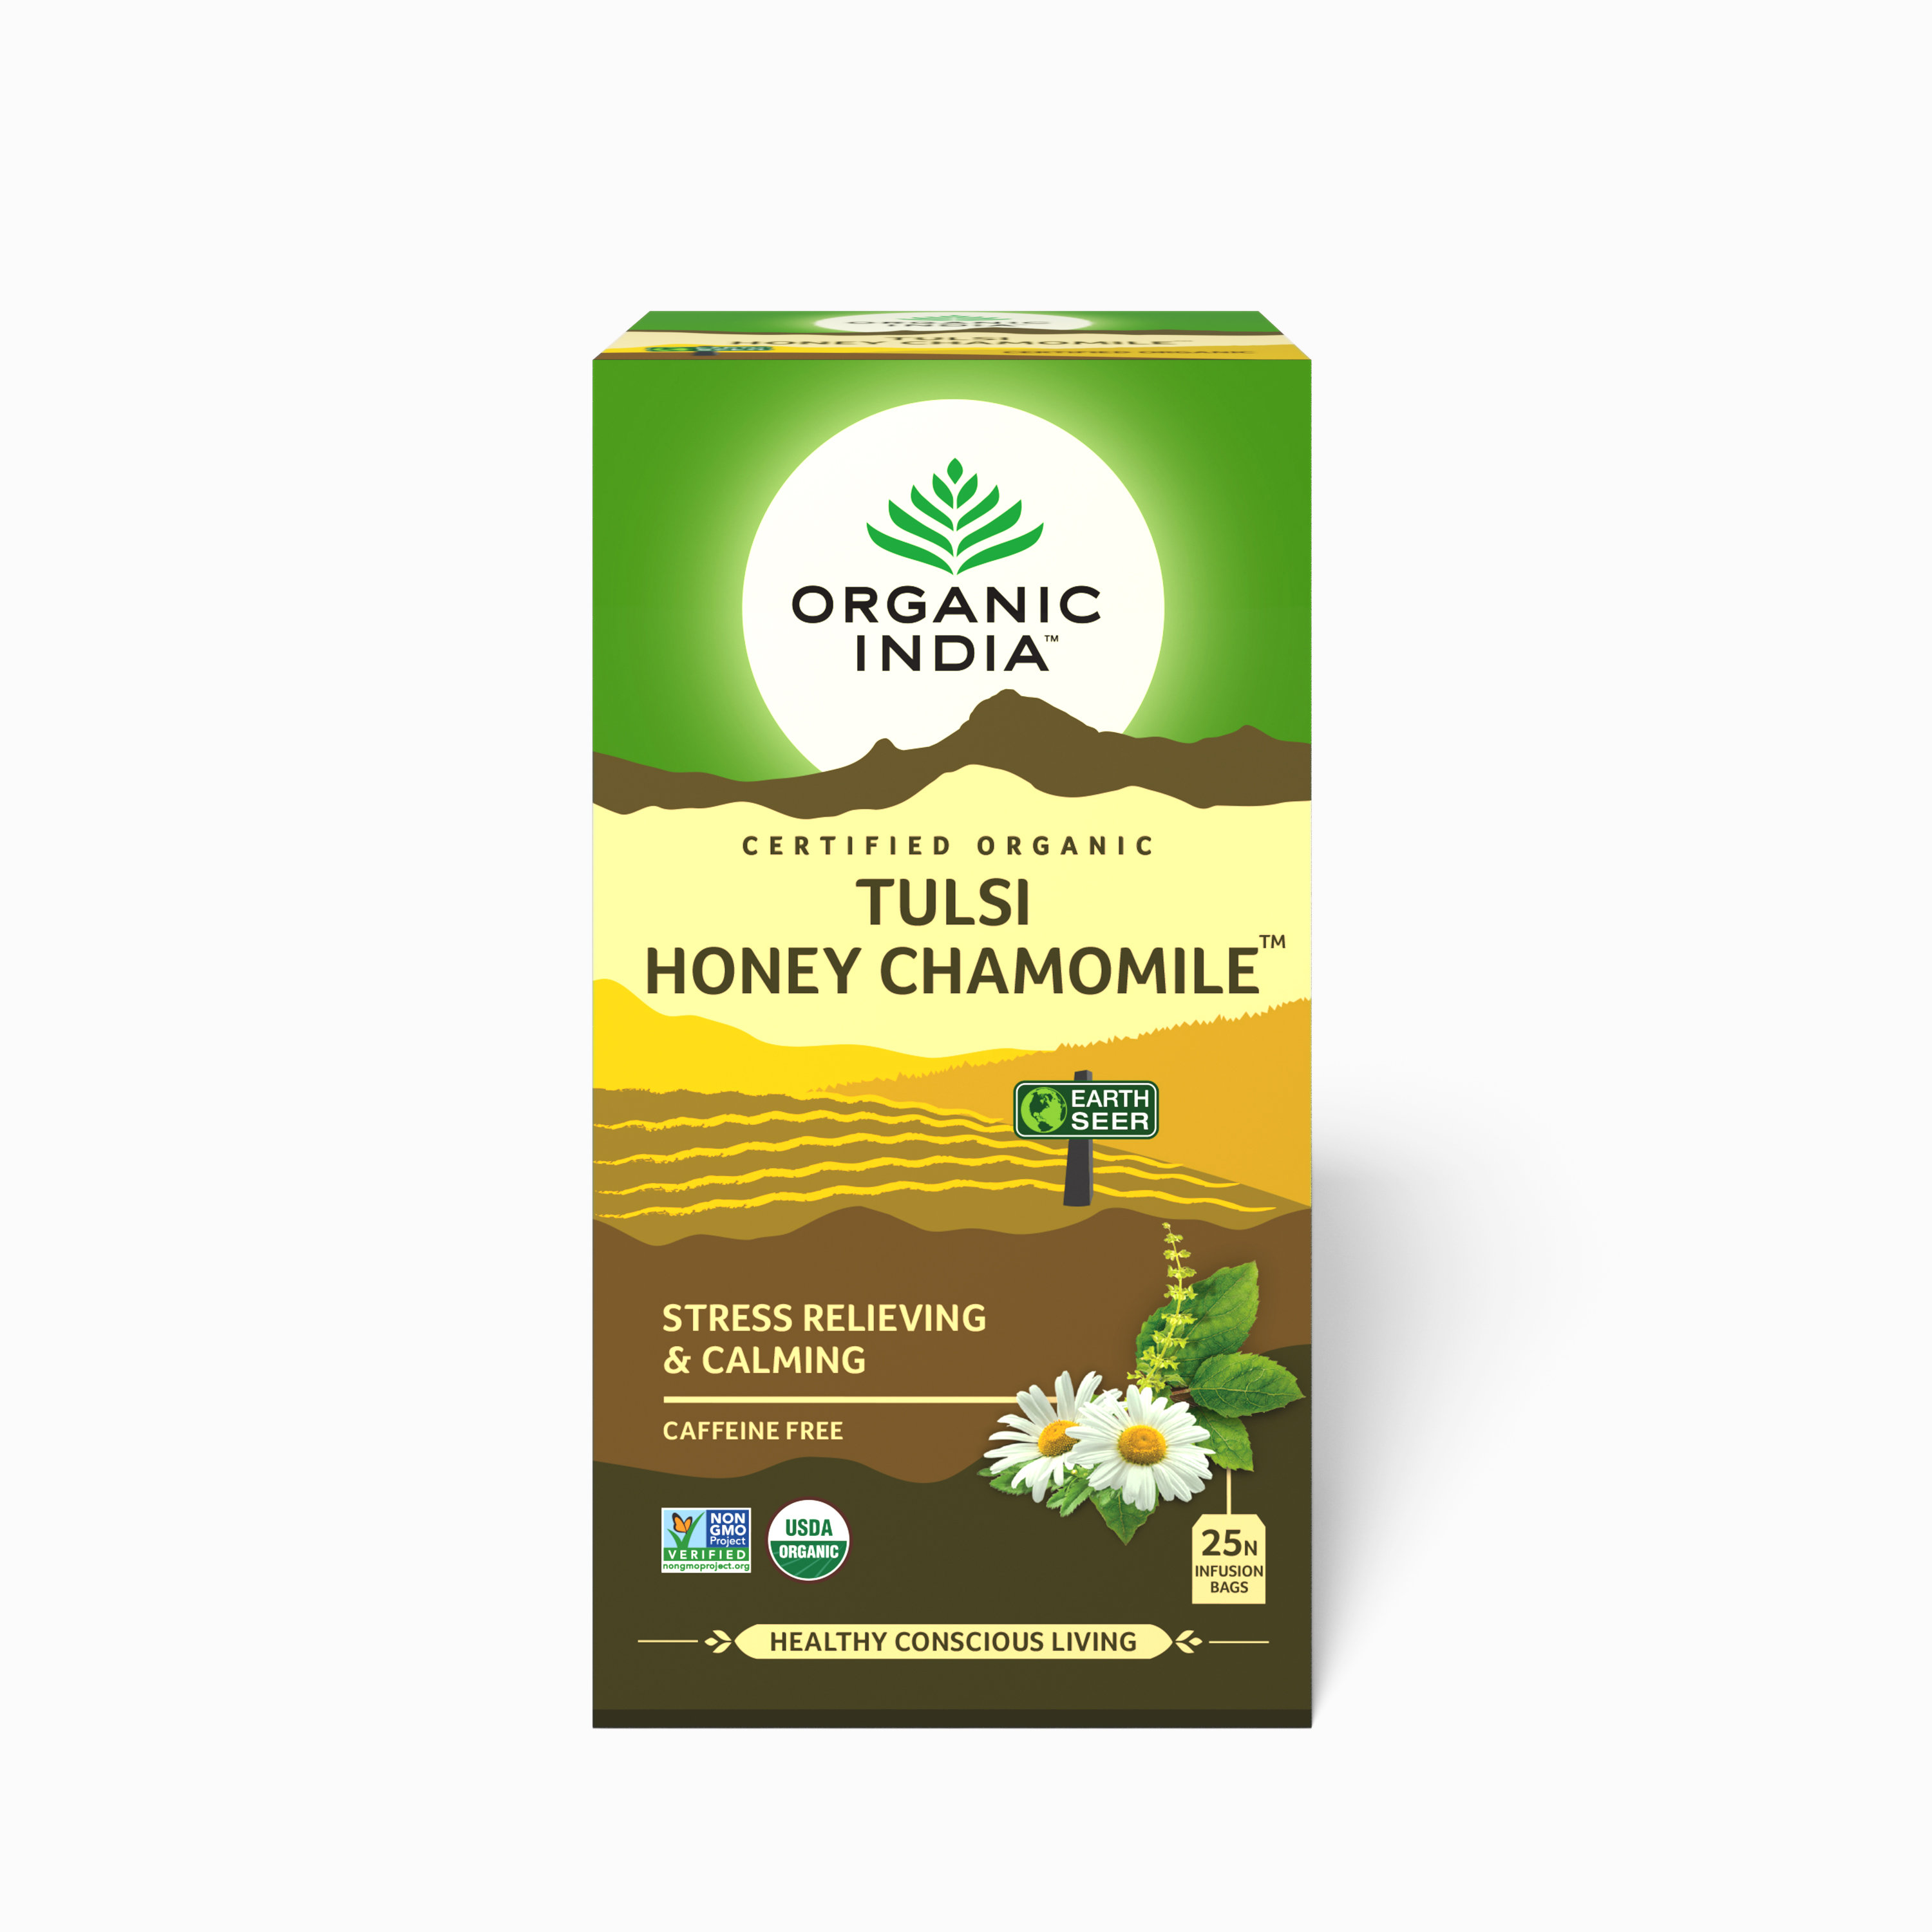 Buy Organic India Tulsi Honey Chamomile at Best Price Online